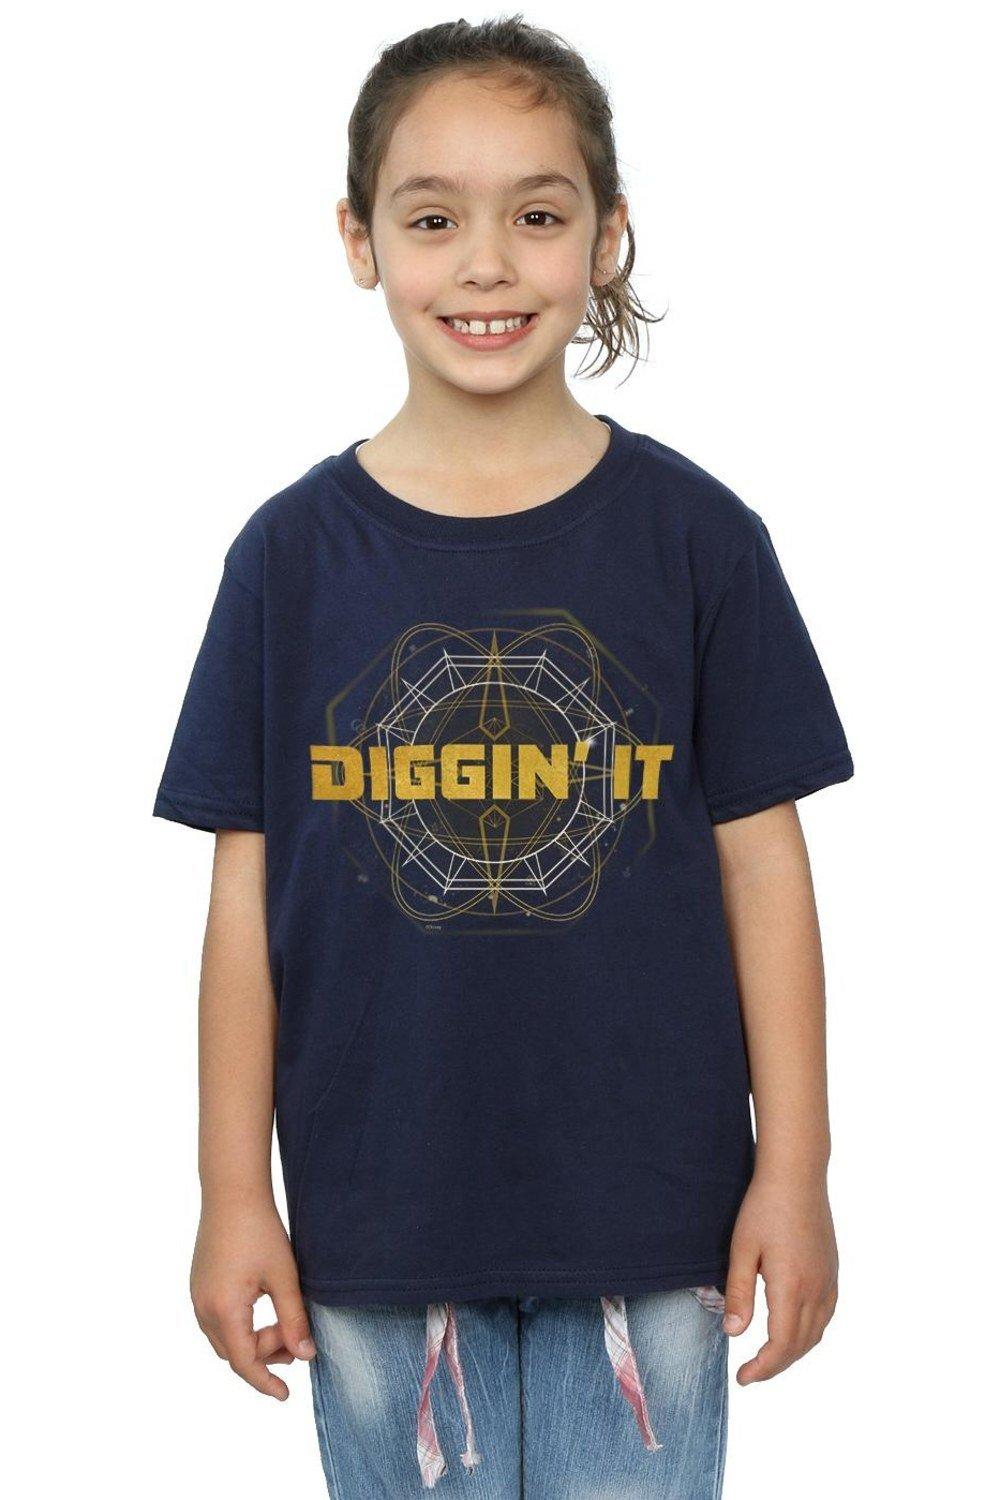 Artemis Fowl Diggin’ It Cotton T-Shirt